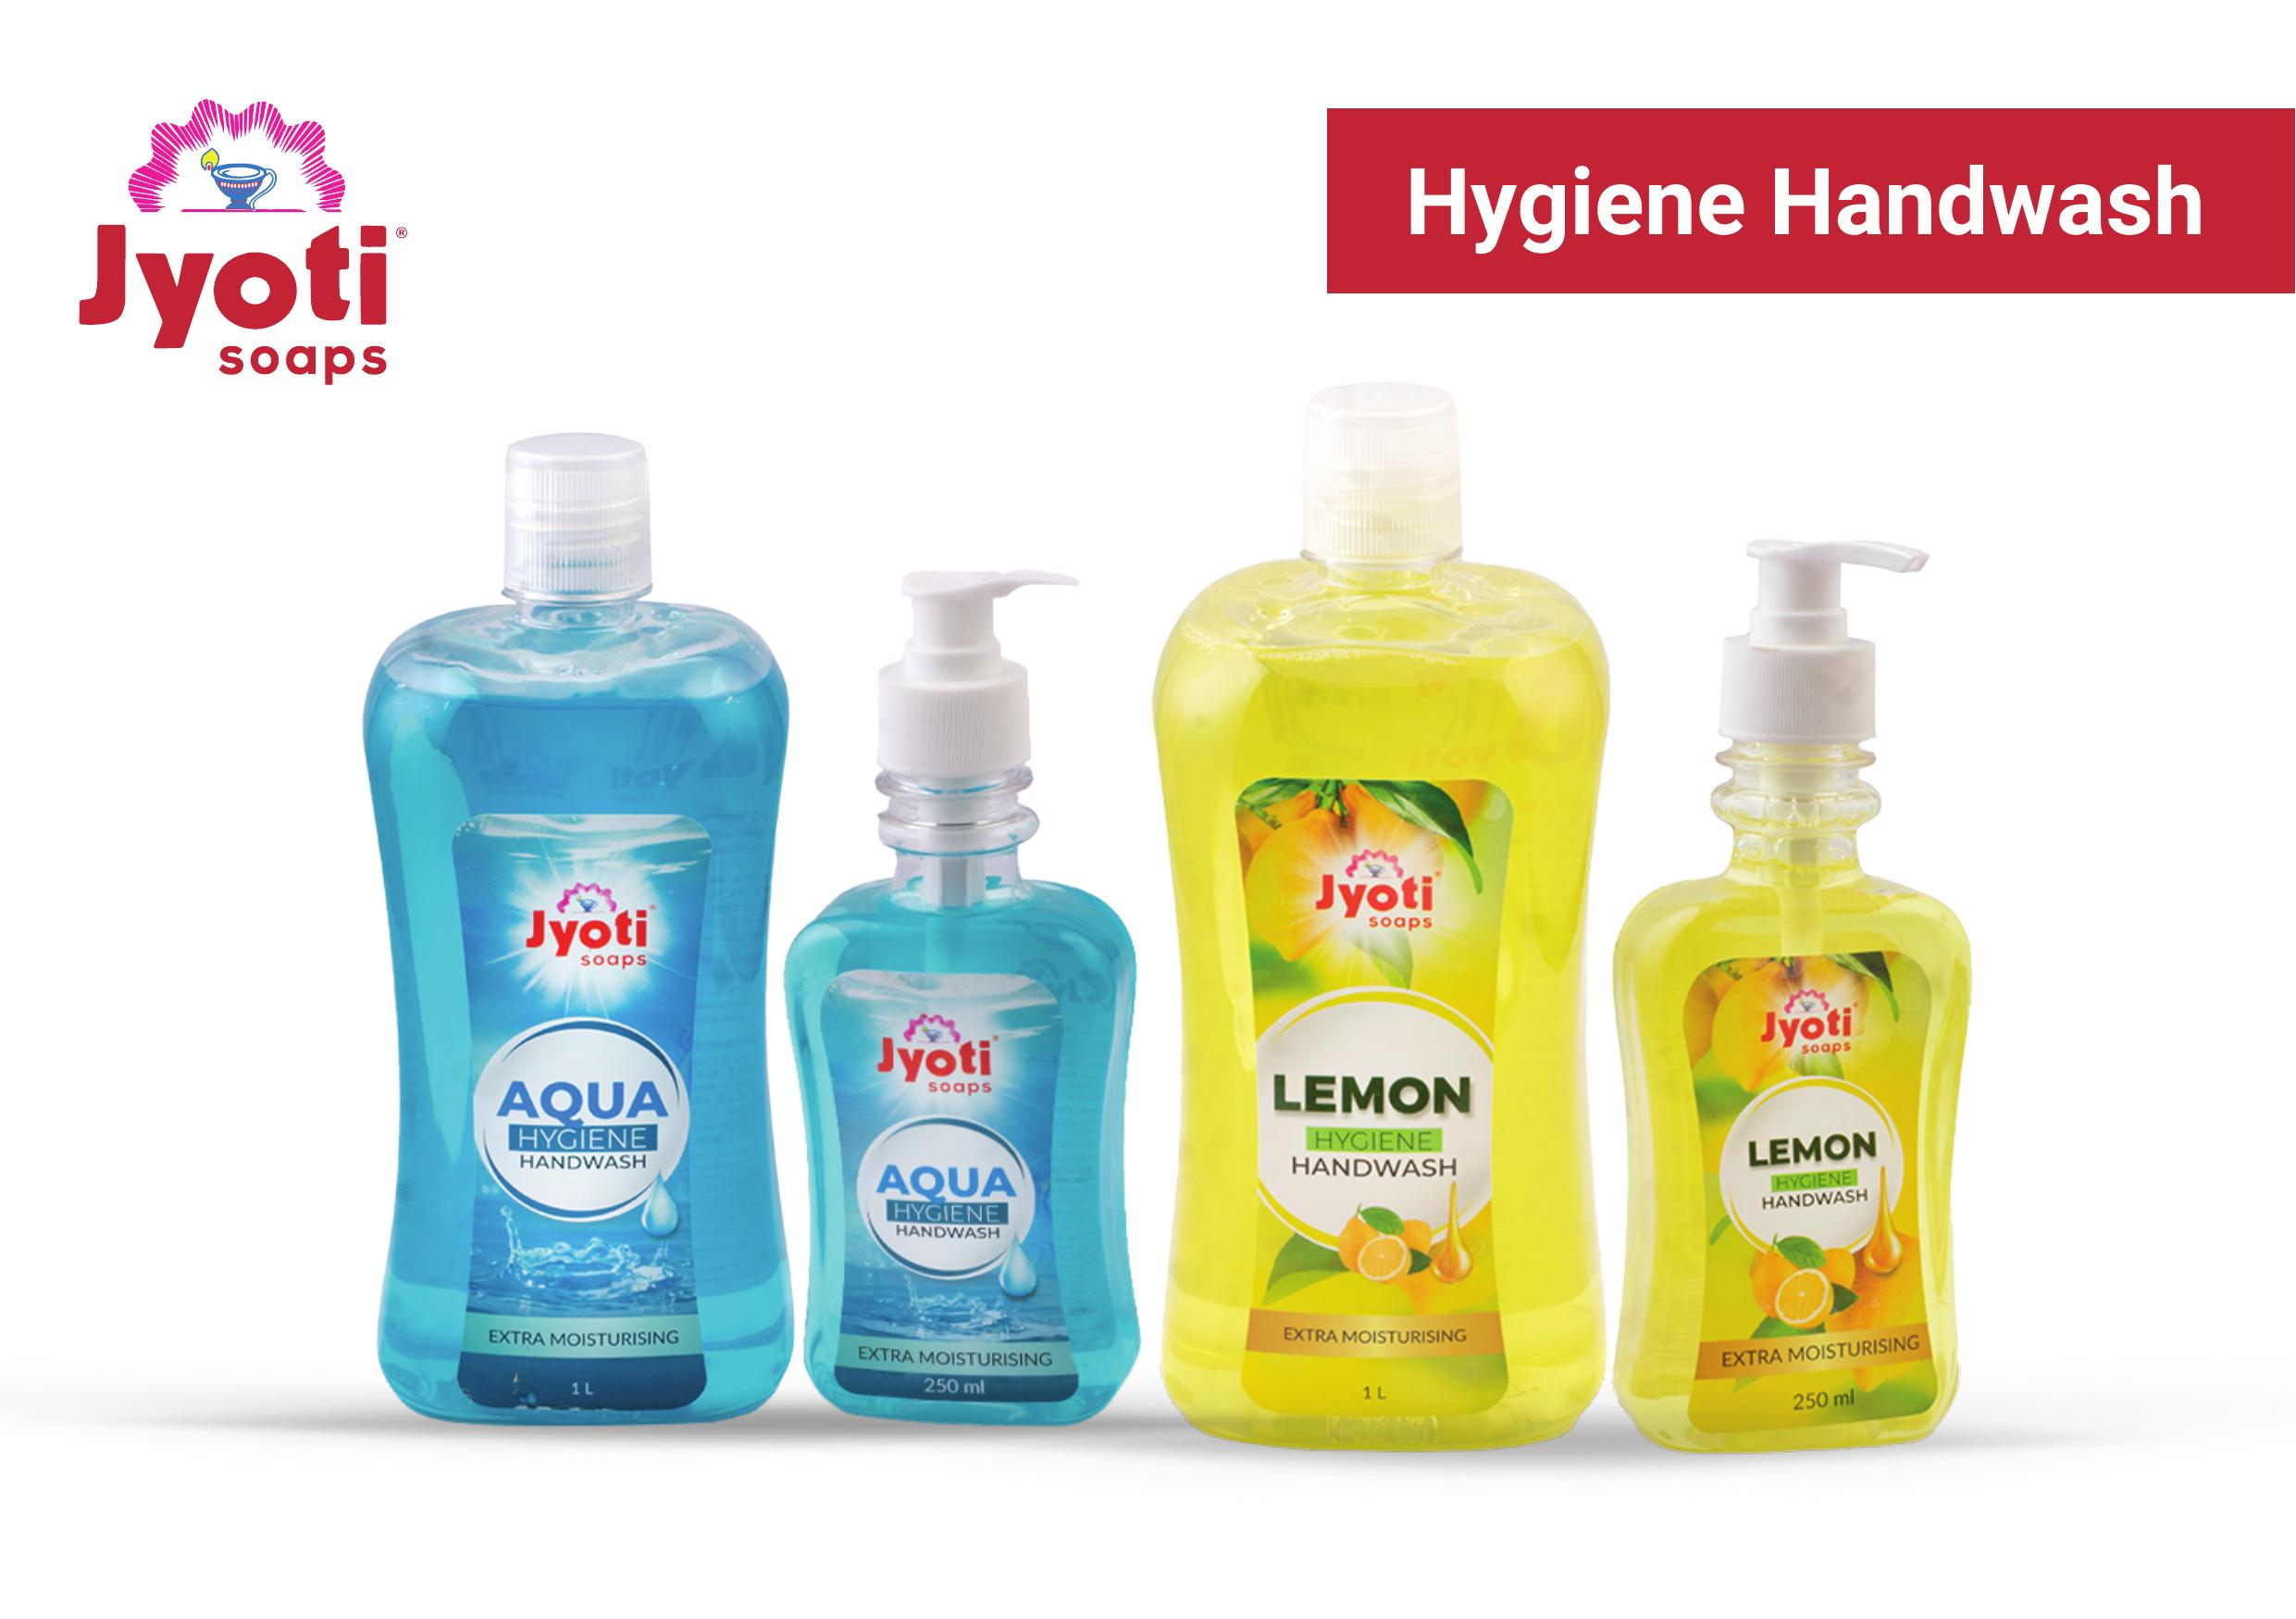 Jyoti Hygiene Handwash